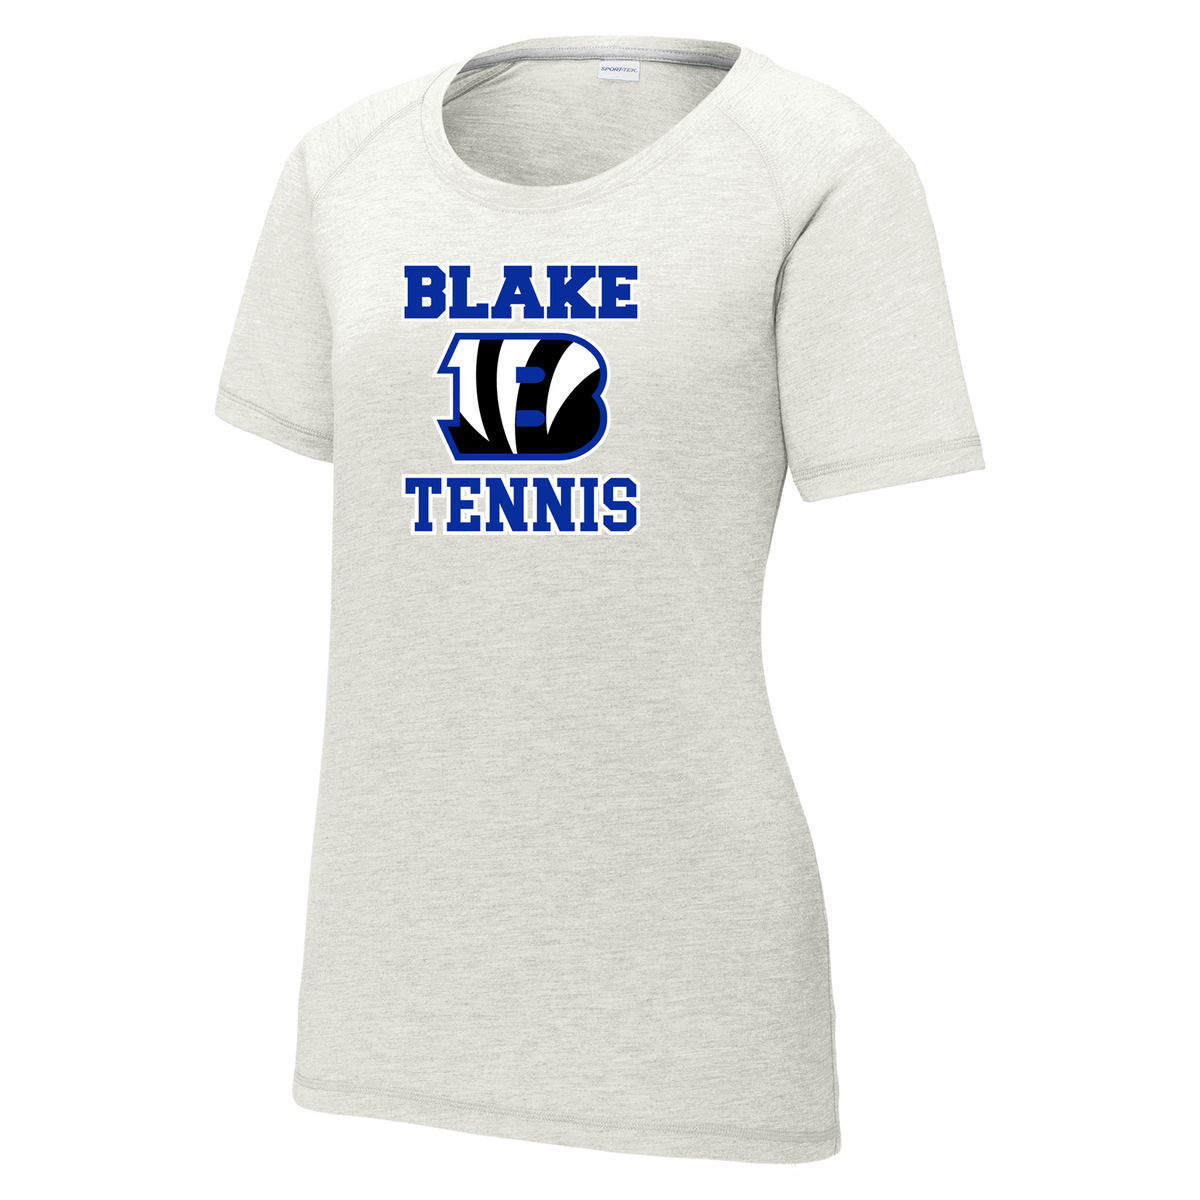 Blake Tennis Women's Raglan CottonTouch